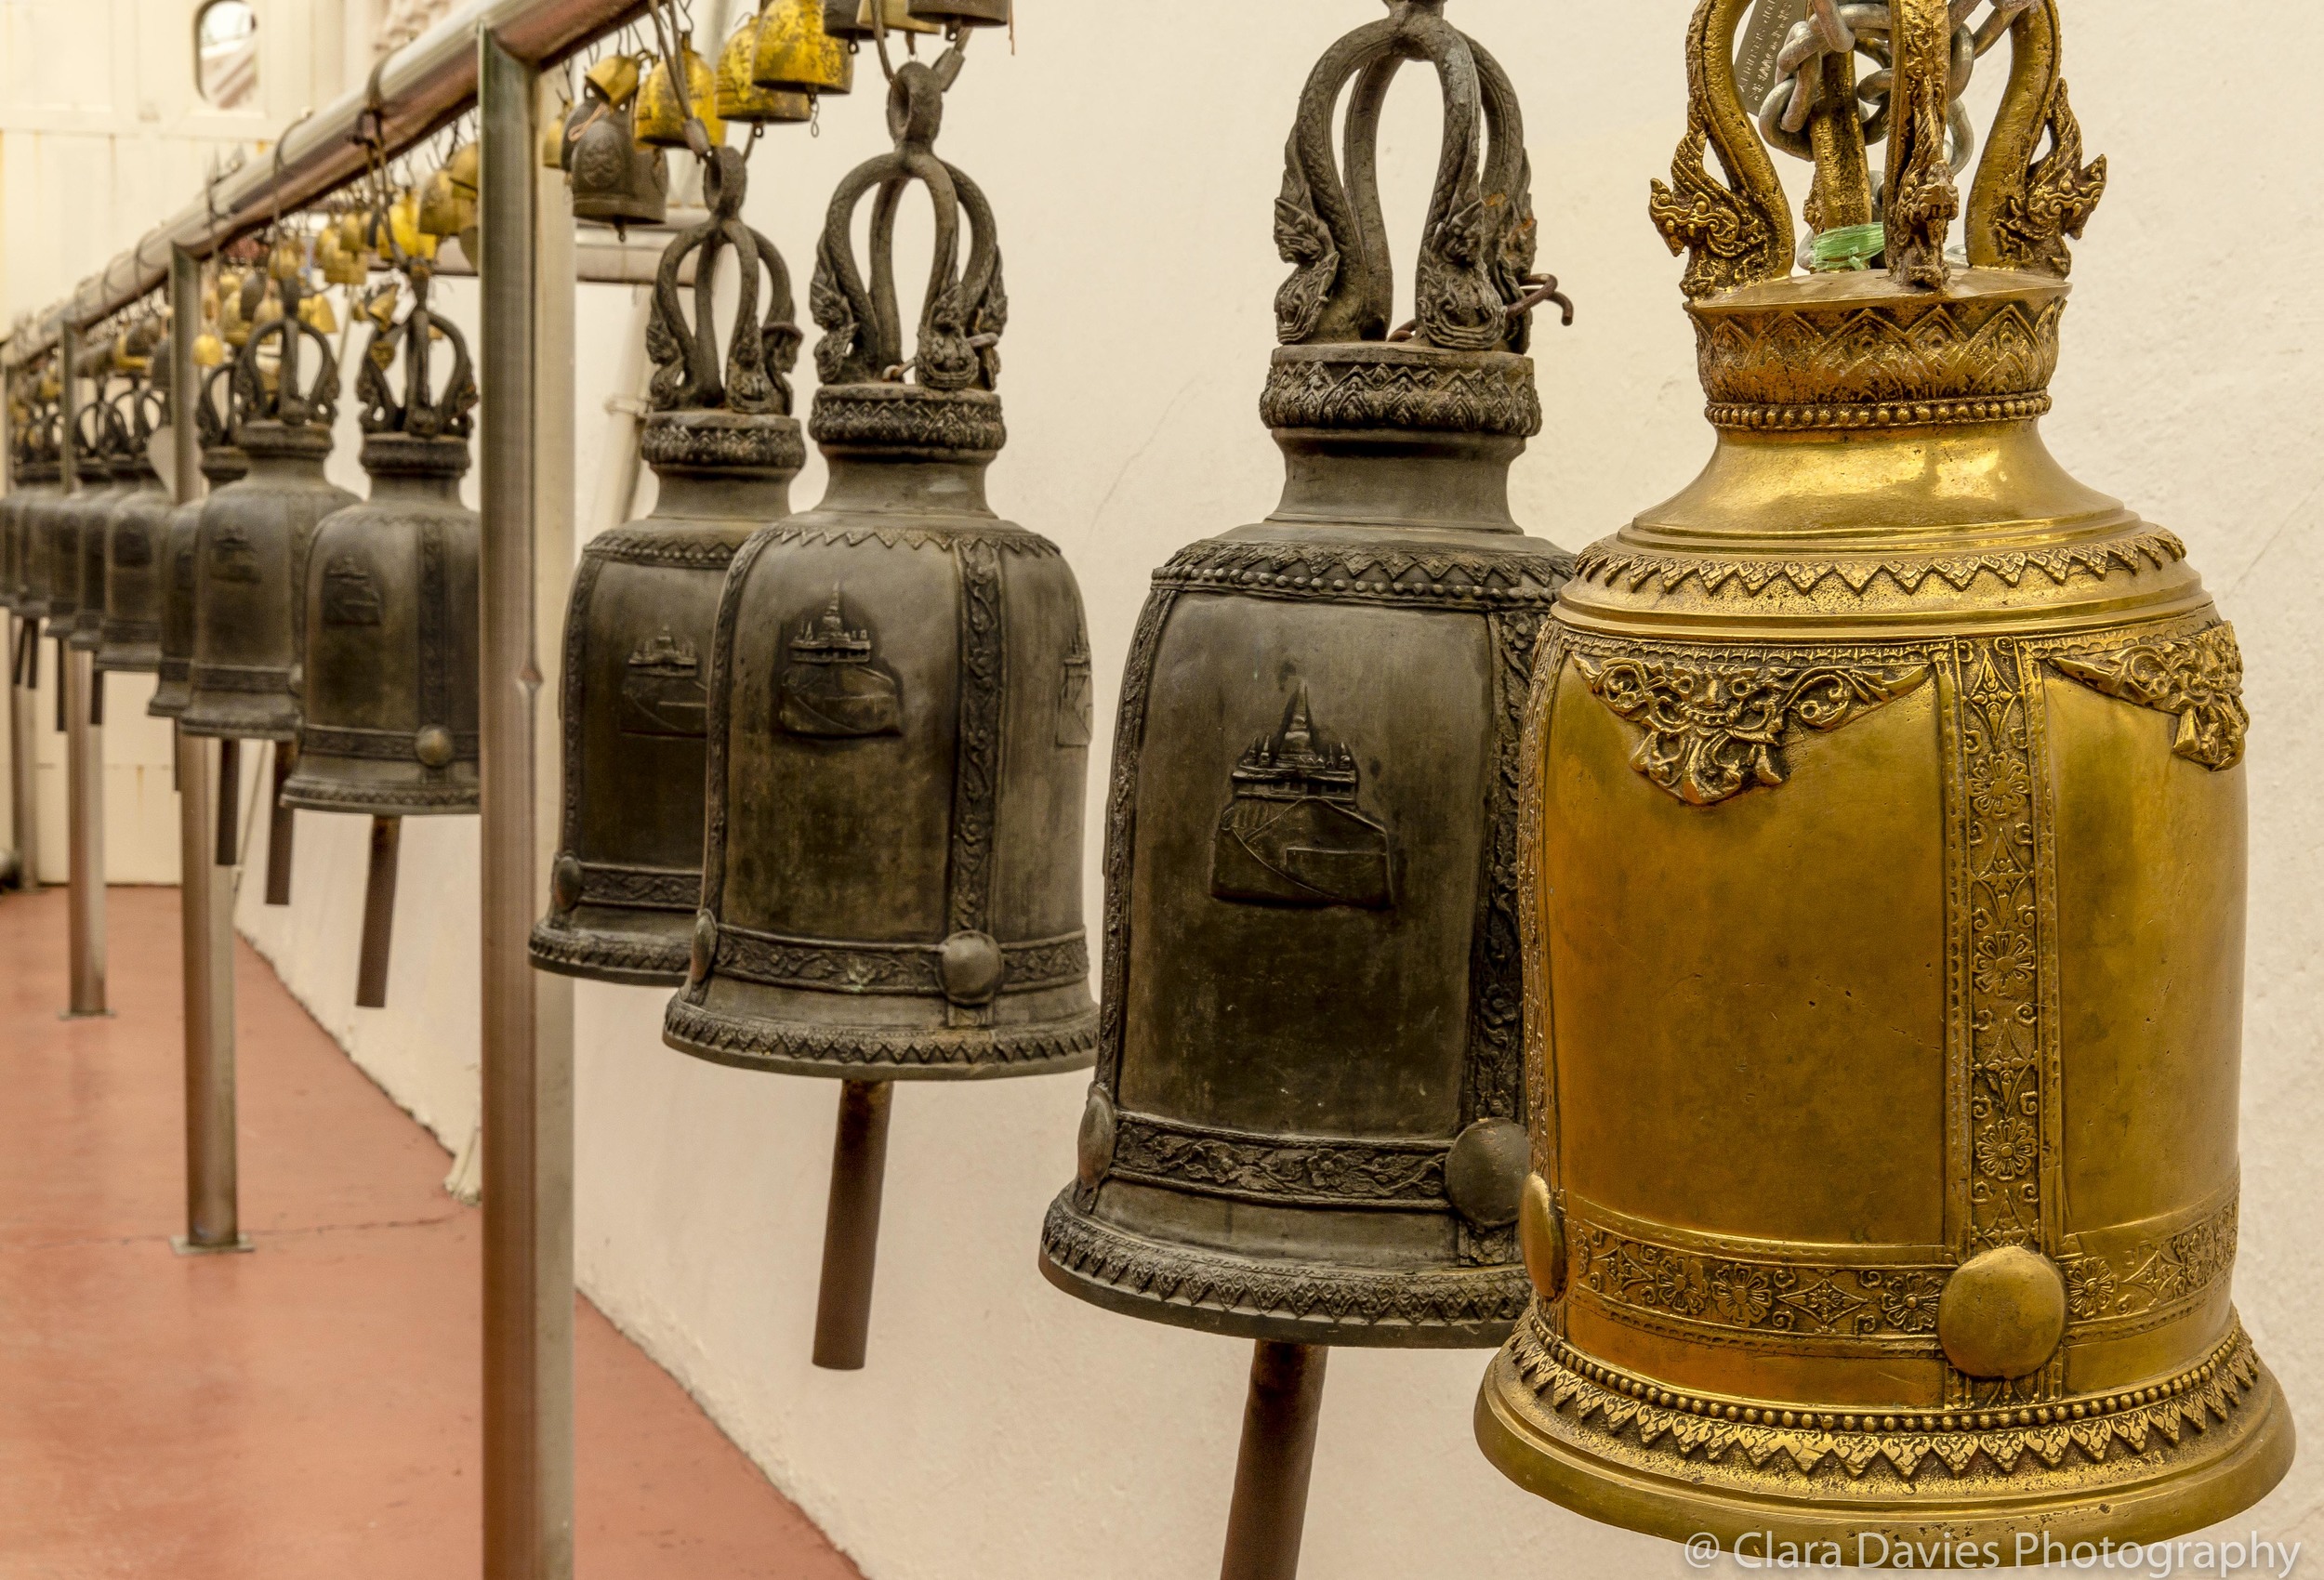 Prayer bells